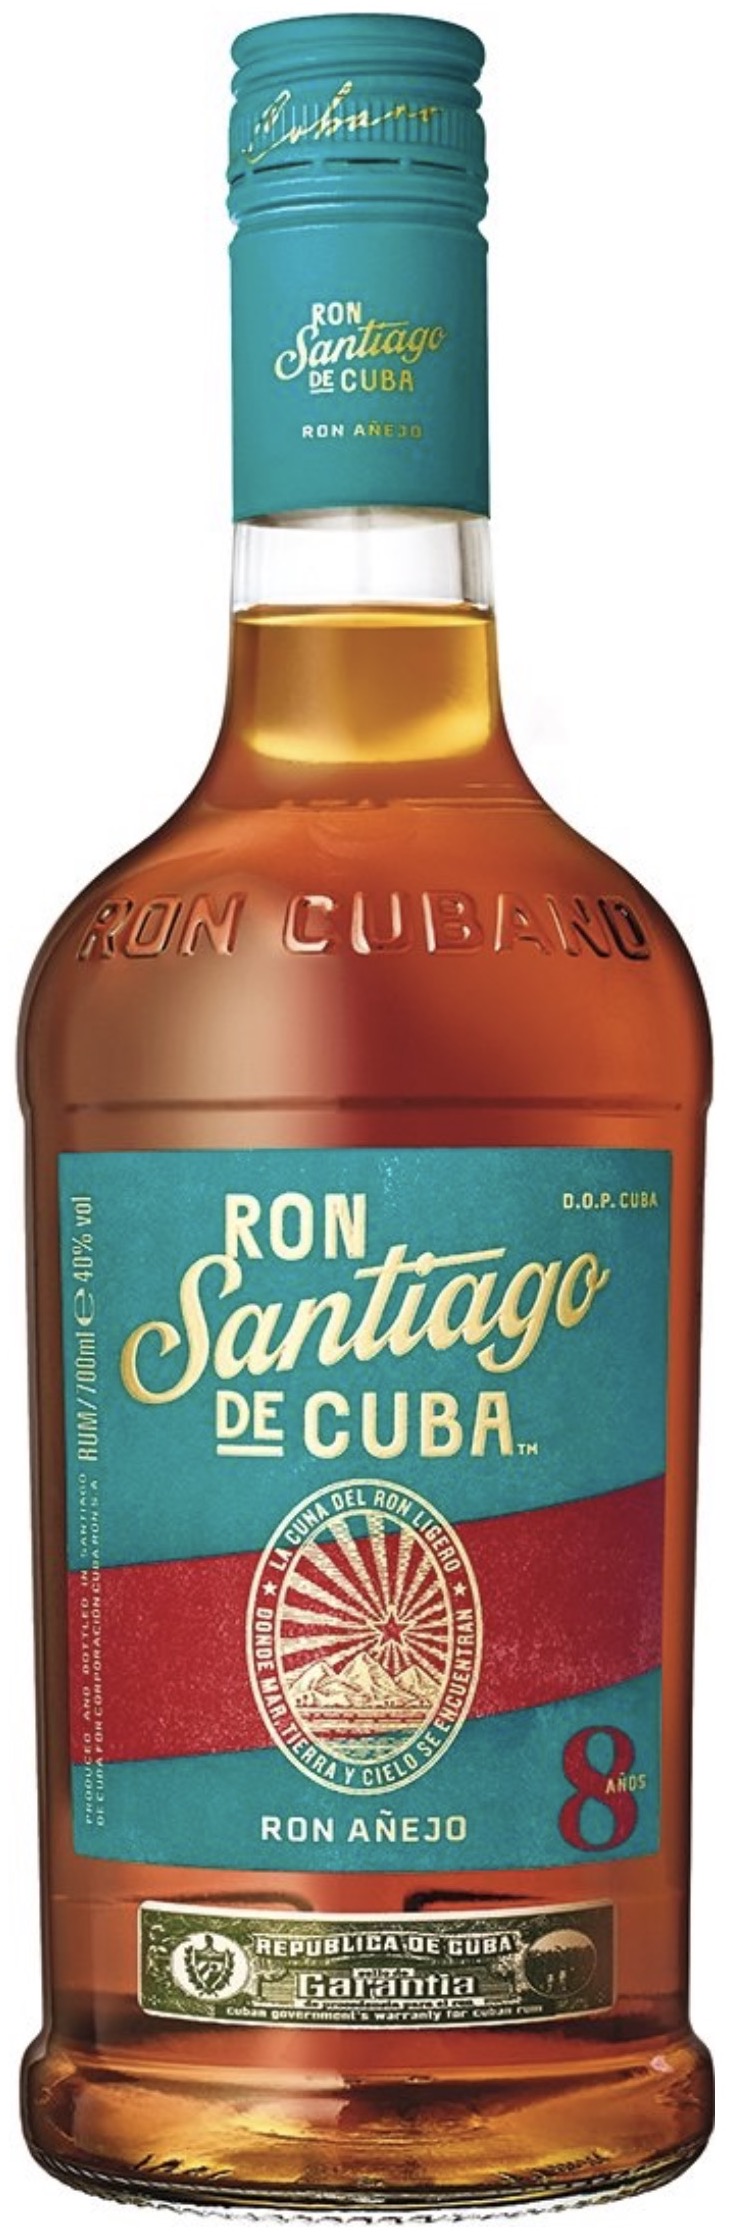 Santiago de Cuba Ron Anejo 8 Jahre Rum 40% vol. 0,7L